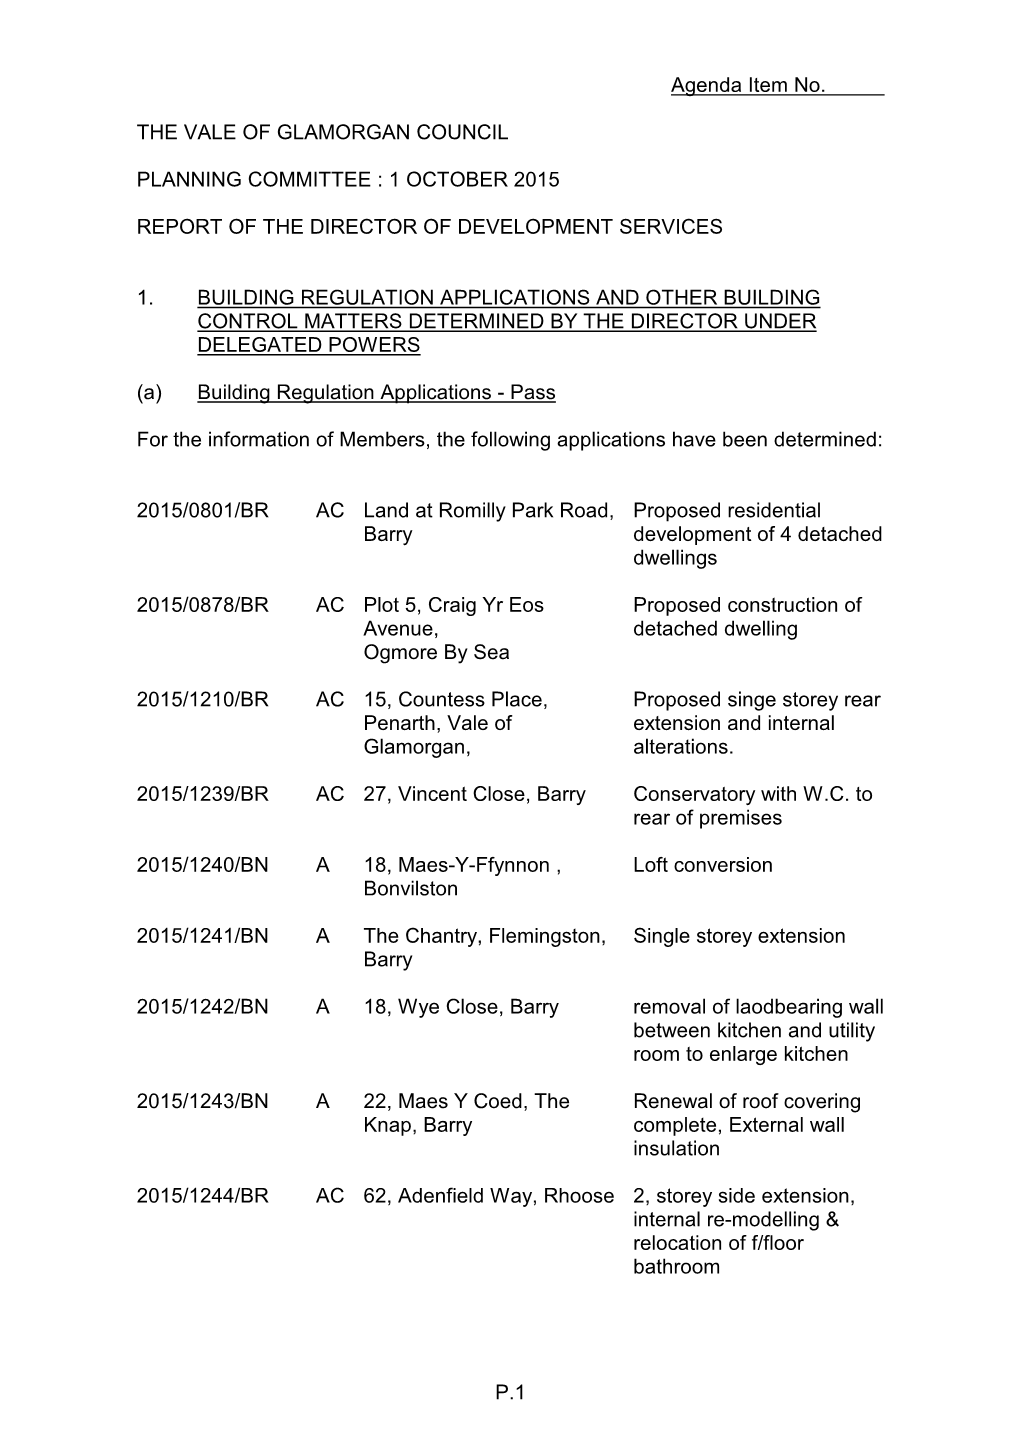 Planning Committee 01-10-2015 Report